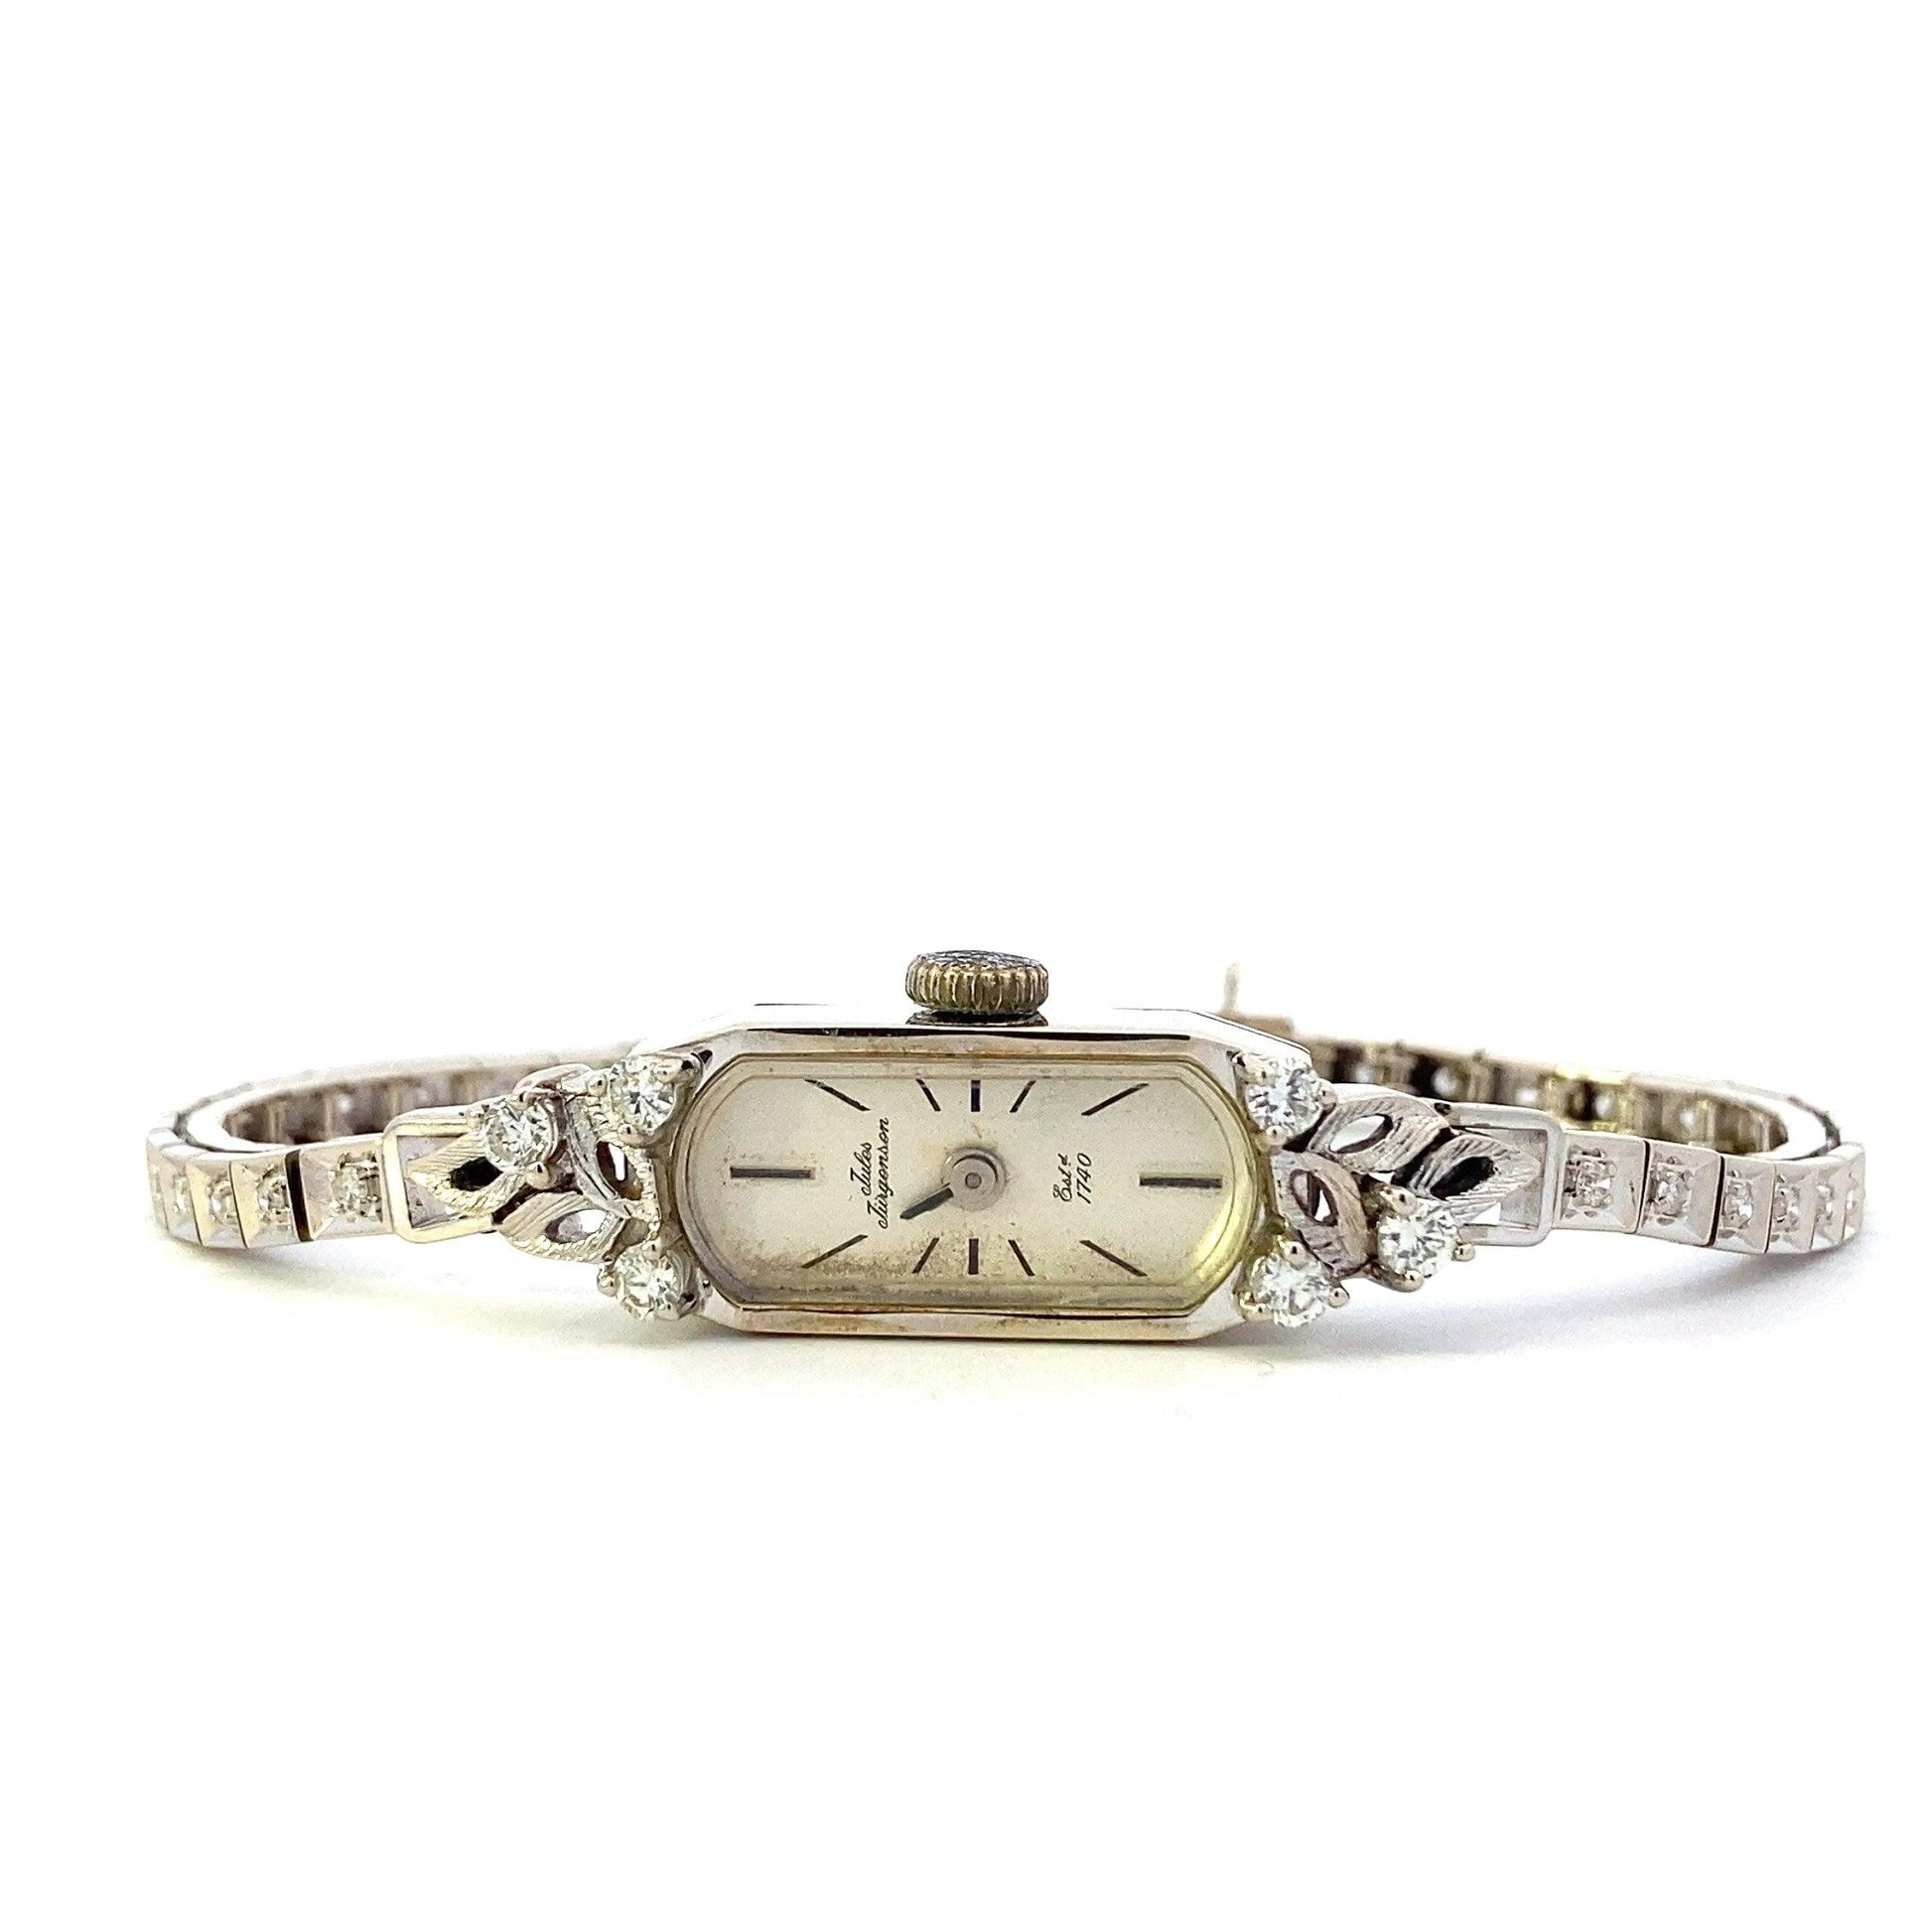 Vintage 14K White Gold Diamond Jules Jurgensen Watch - approx 0.96ct - ipawnishop.com